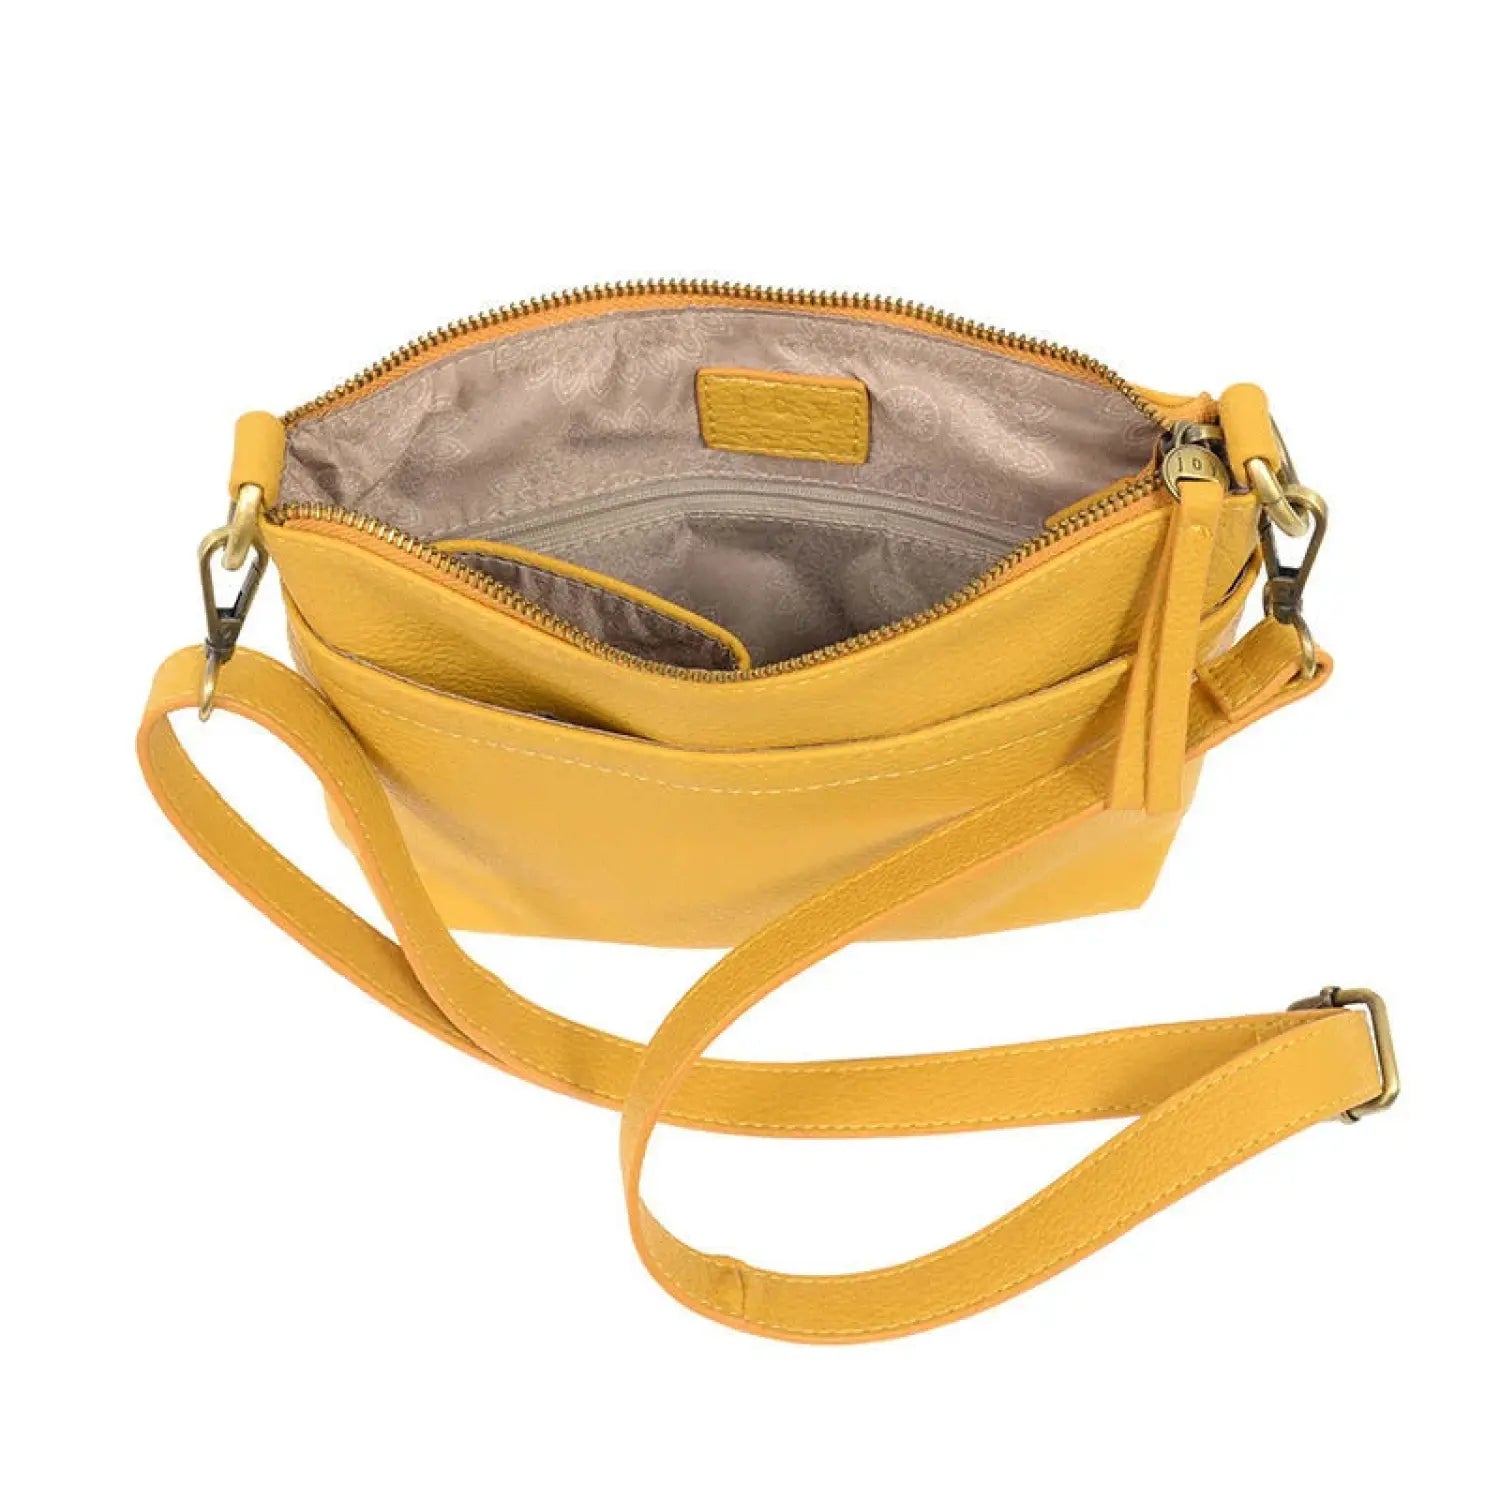 Layla Top Zip Crossbody Bag in Sunflower Yellow. Inside View.